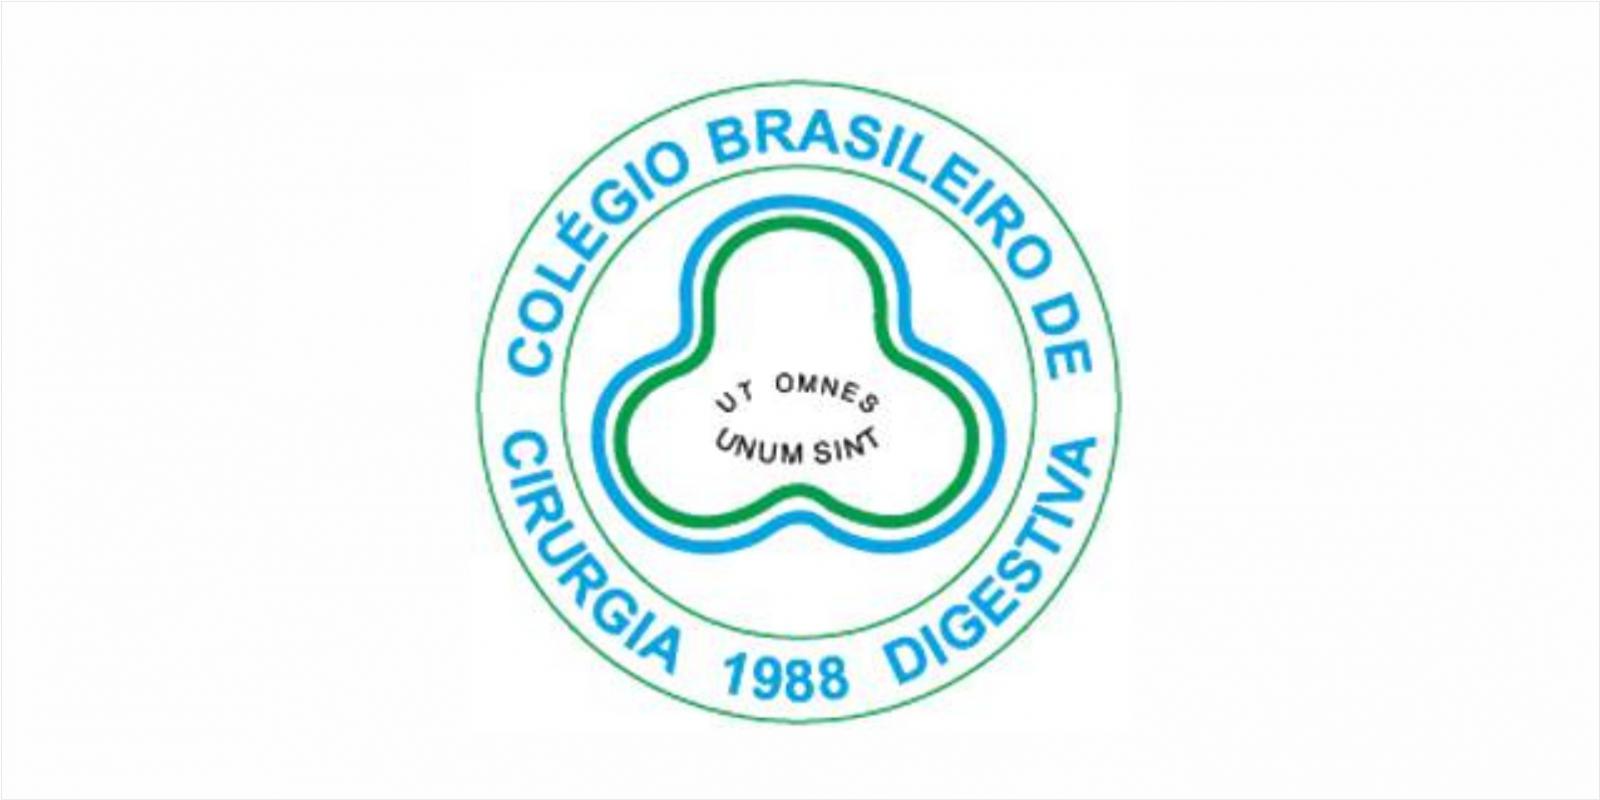 Colégio Brasileiro de Cirurgia Digestiva